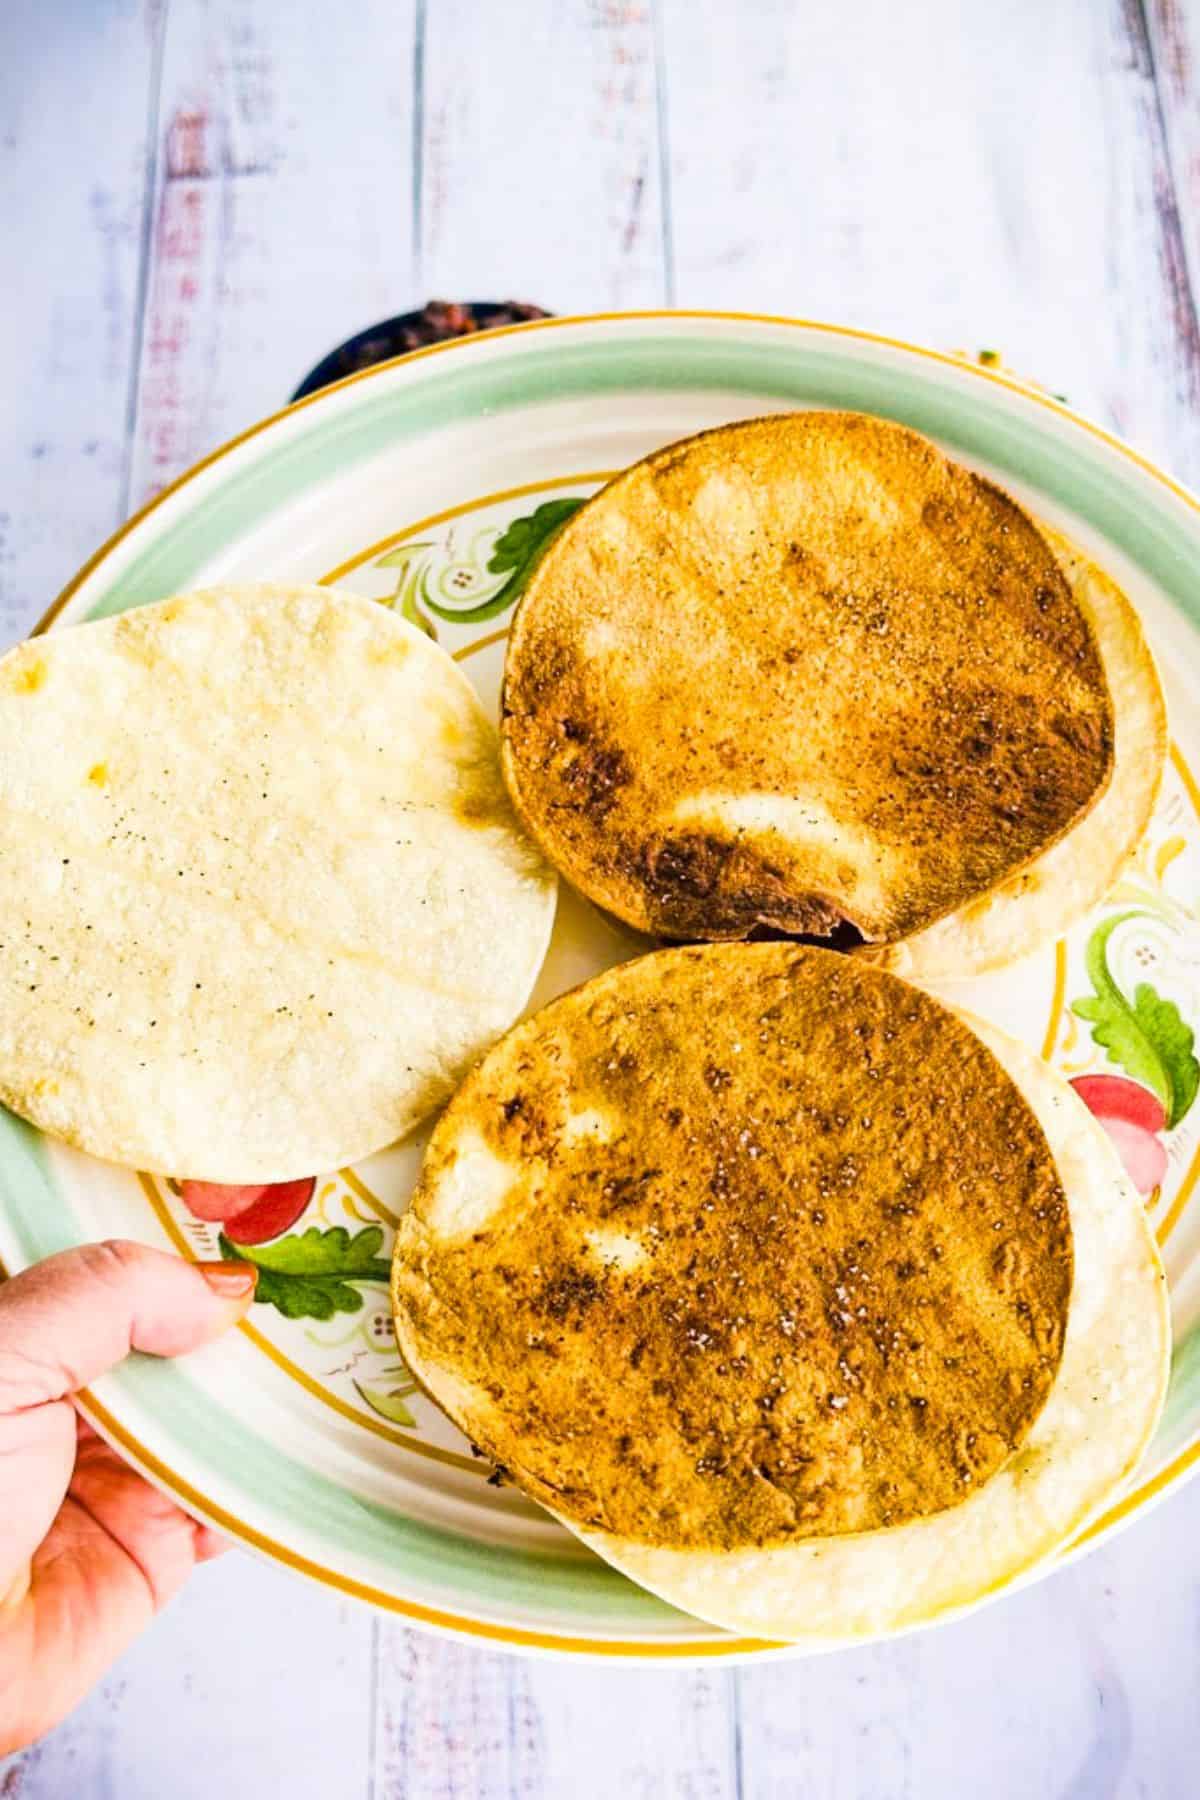 showing burnt tostadas vs cripy toasted tostadas